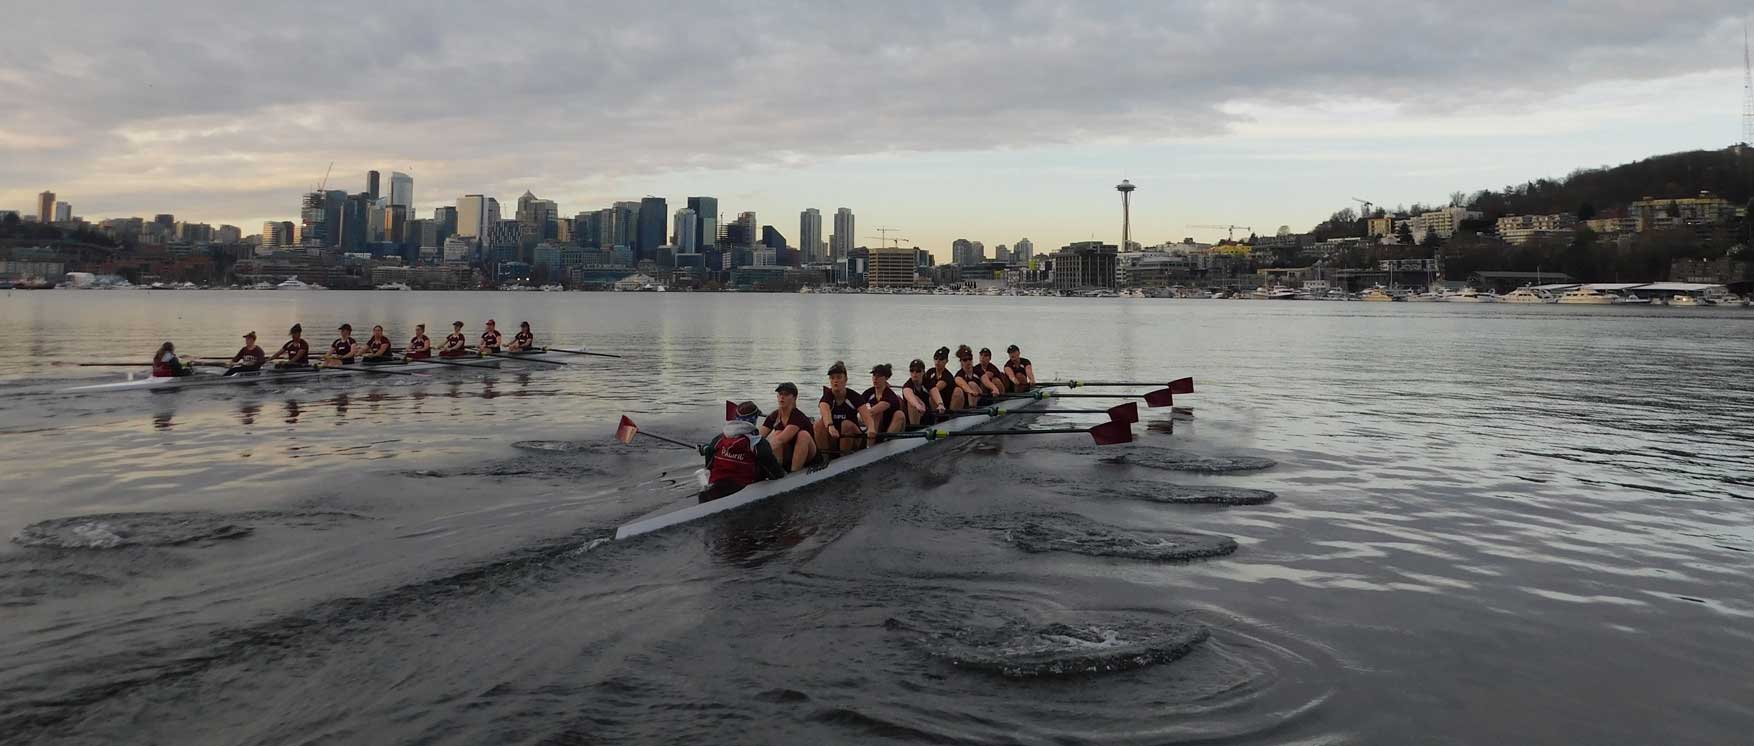 crew team row on lake union